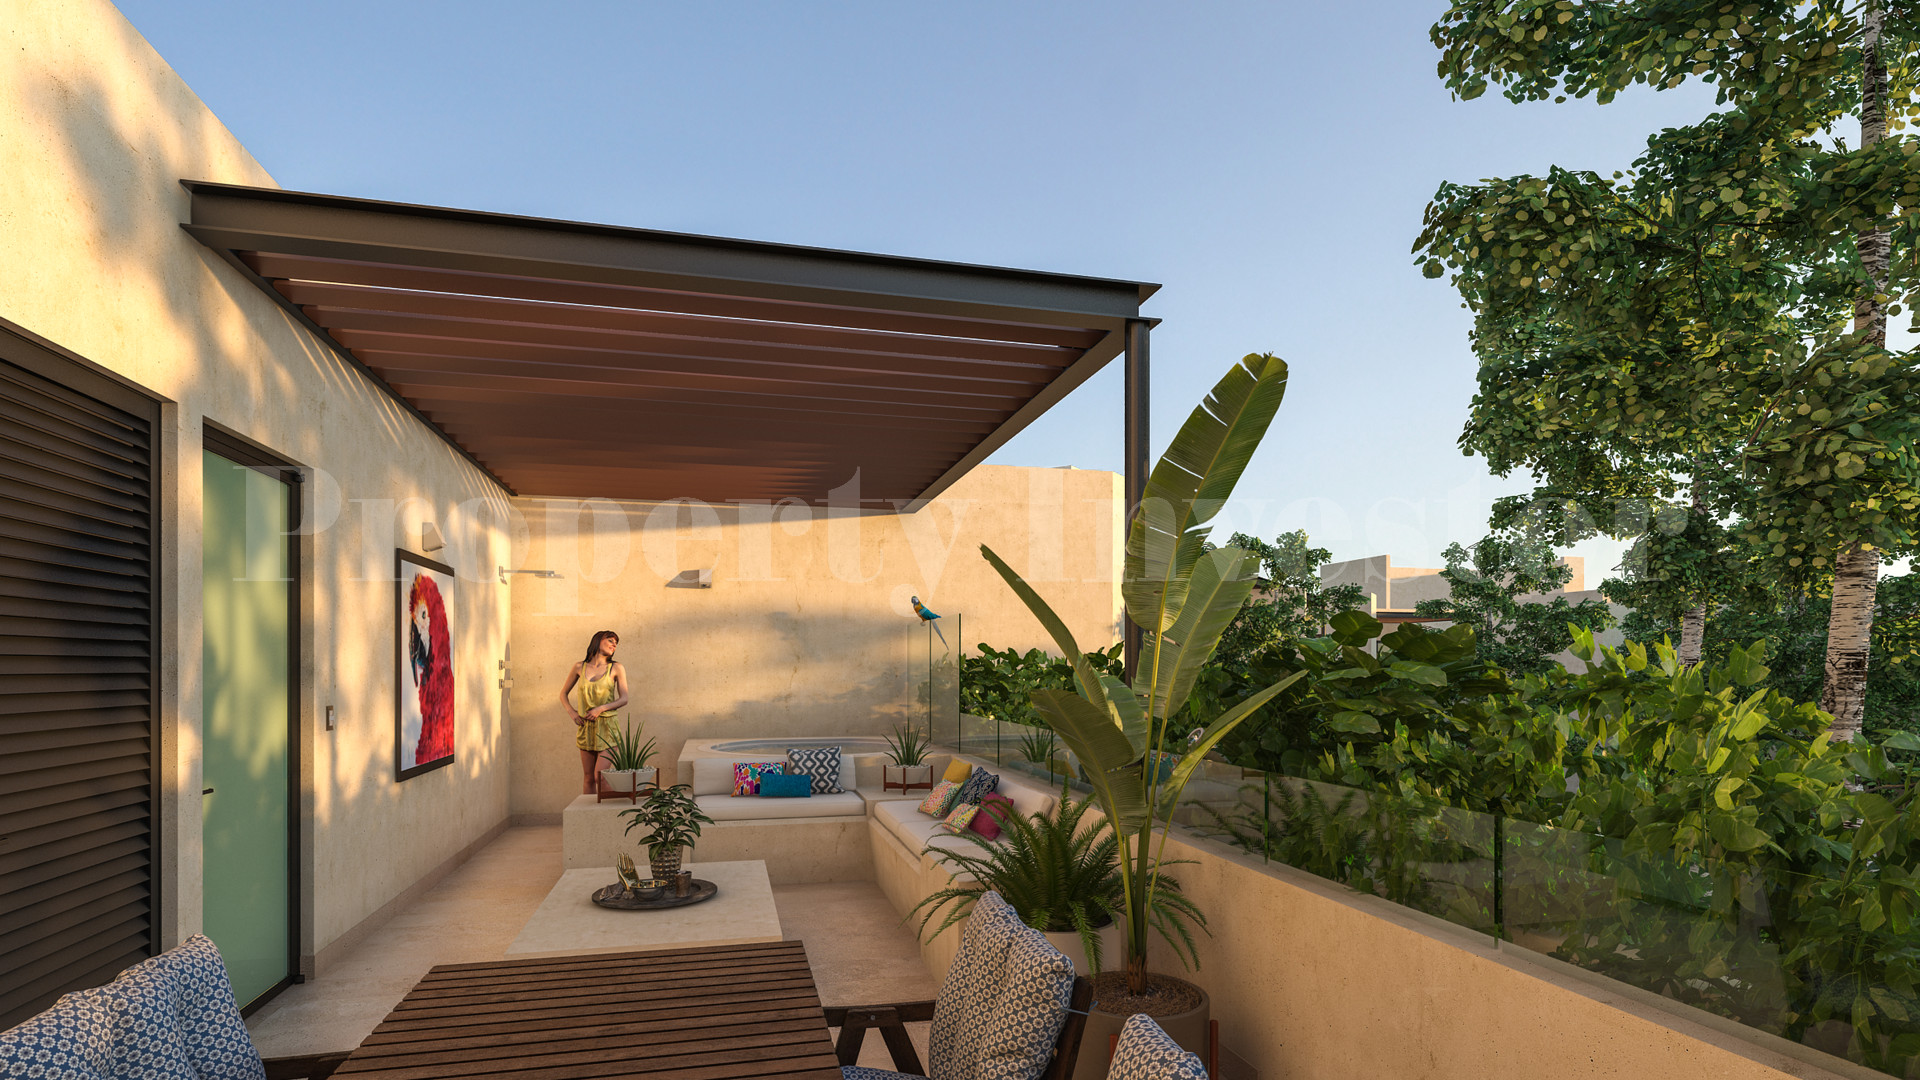 2 Bedroom Boutique Apartment with Garden in Tulum (B-006)